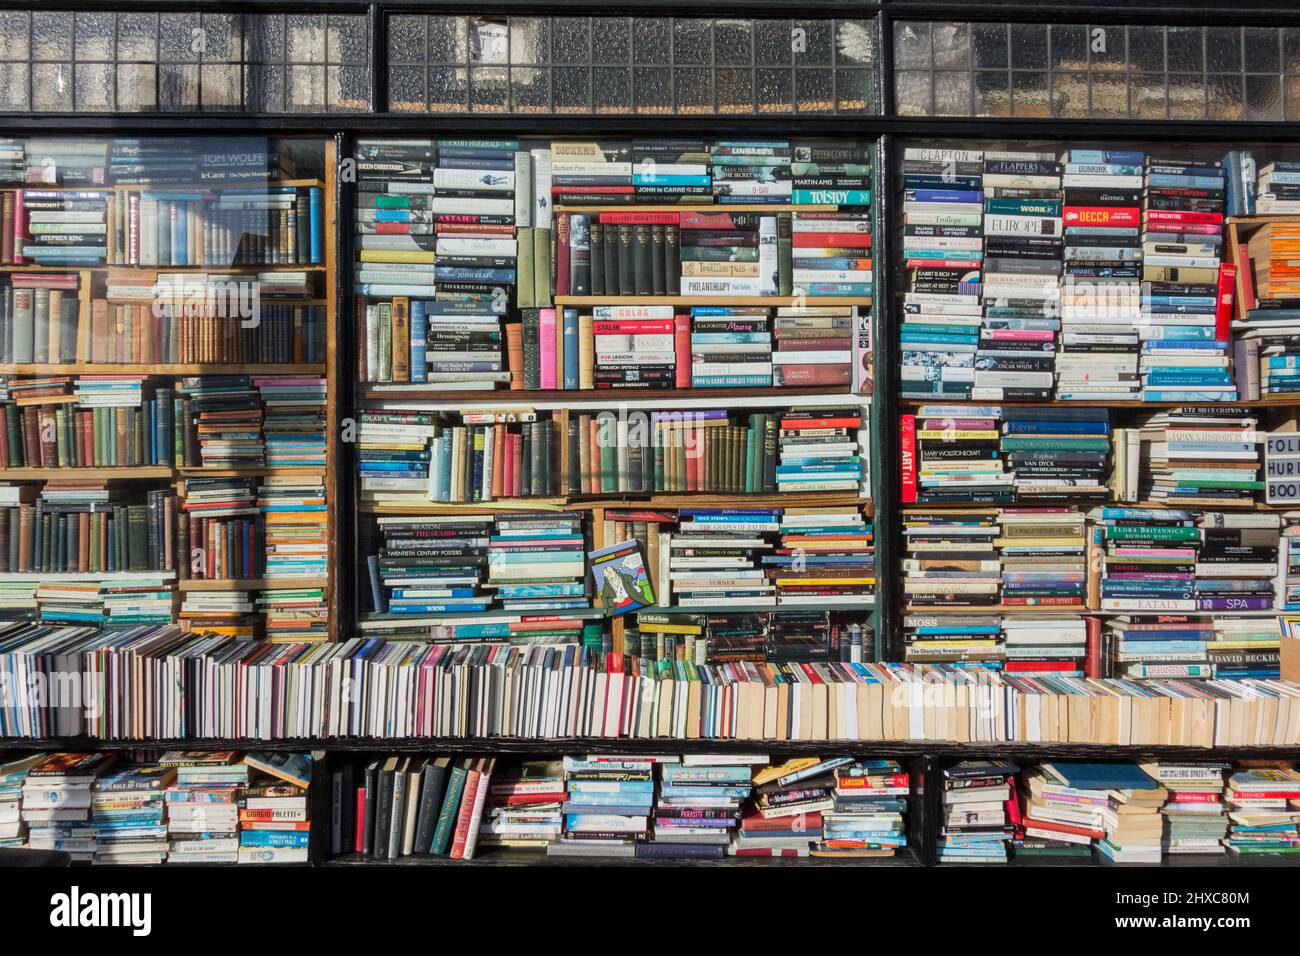 Hurlingham Bookshop, Ranelagh Gardens, Fulham High Street, London, SW6, England, U.K. Stock Photo